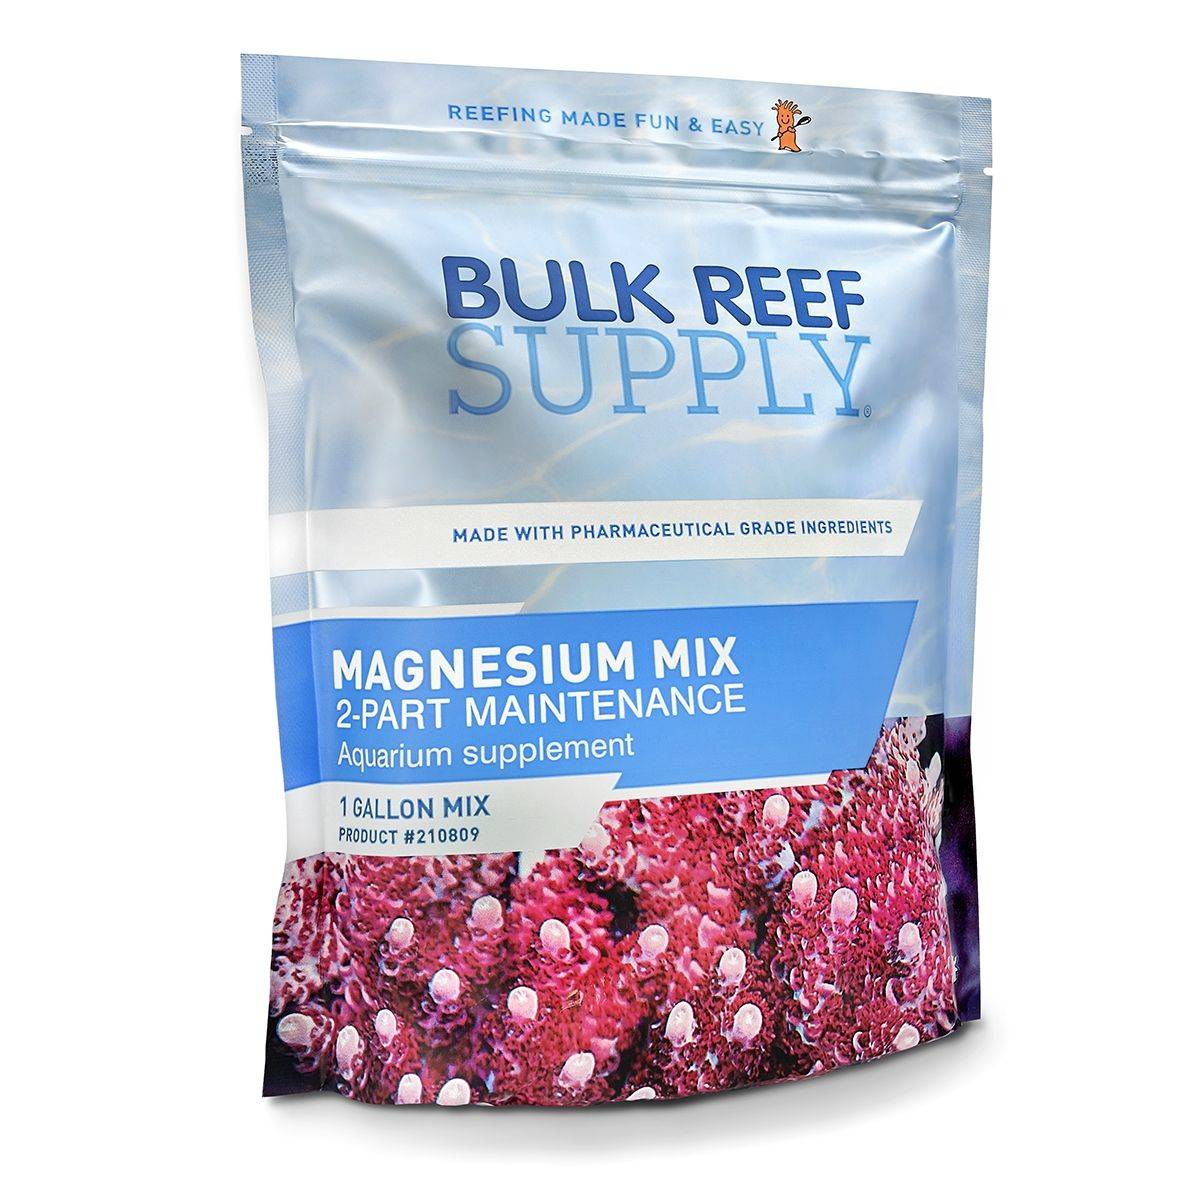 Bulk Reef Supply Pharma Magnesium Mix for 2-Part Maintenance